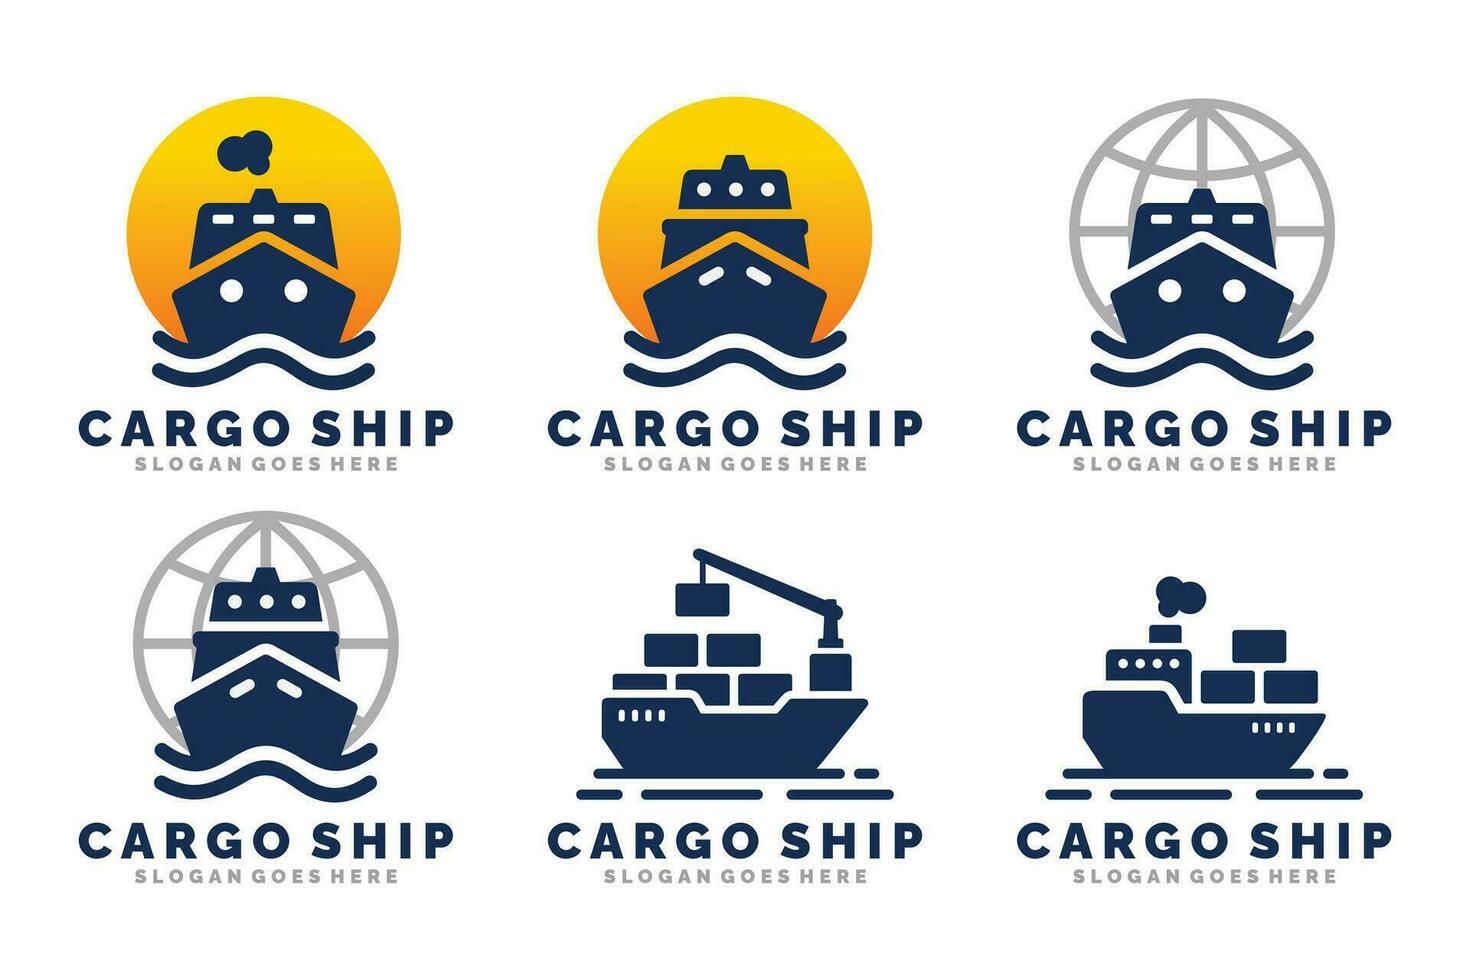 Cargo ship logo set design vector illustration